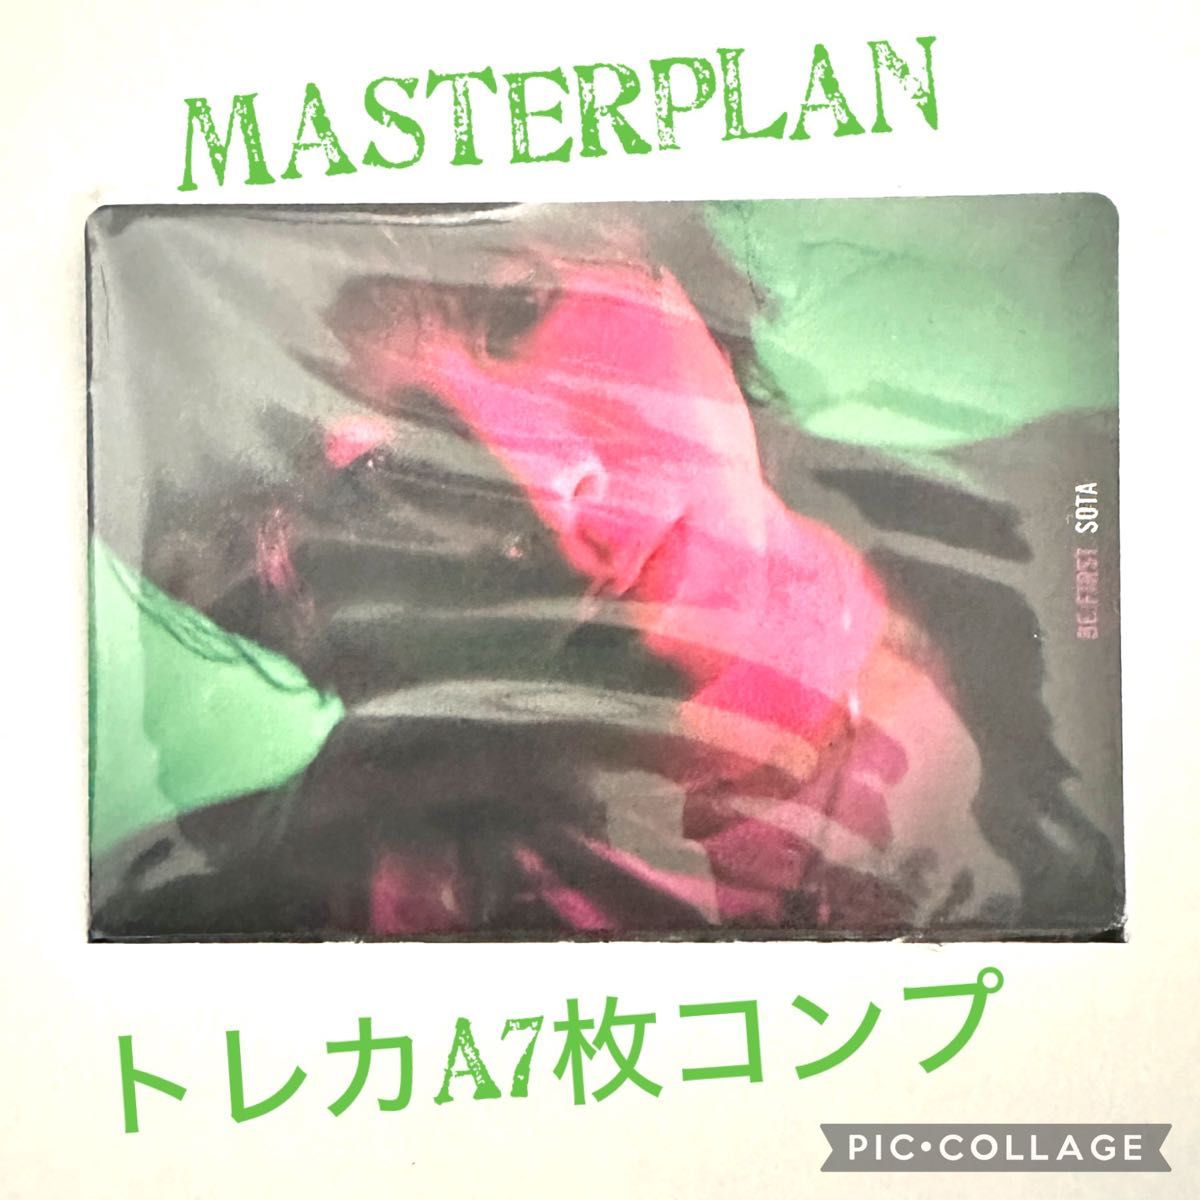 MasterplanトレカA☆7枚コンプBE:FIRST